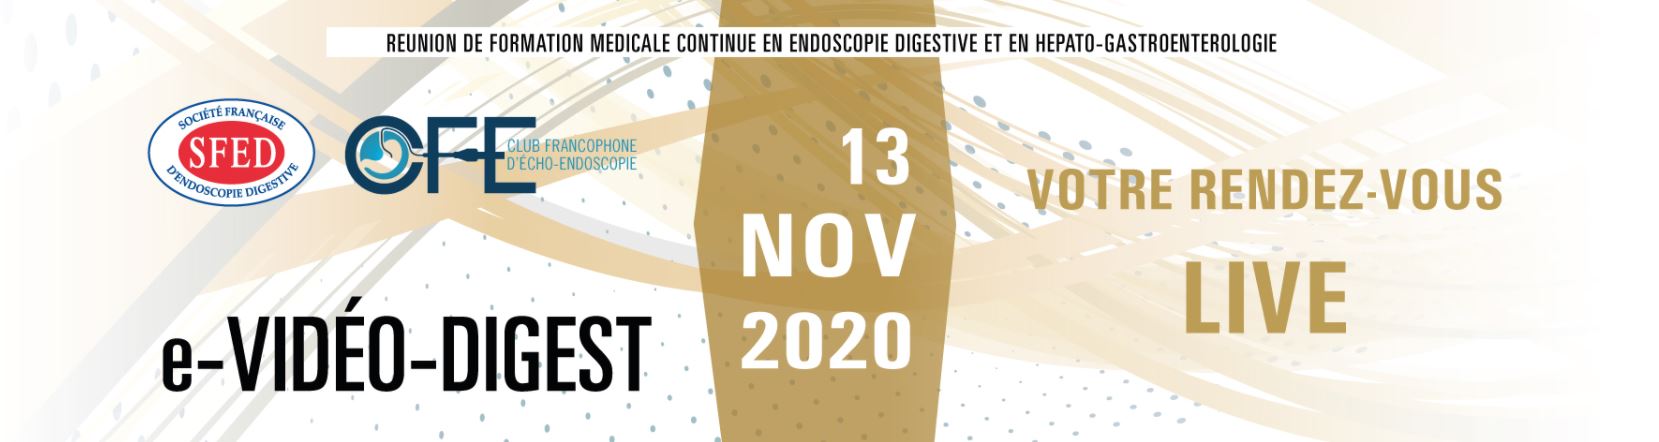 Réunion de Formation Médicale Continue en Endoscopie Digestive et en Hepato-Gastroenterologie - SFED 2020